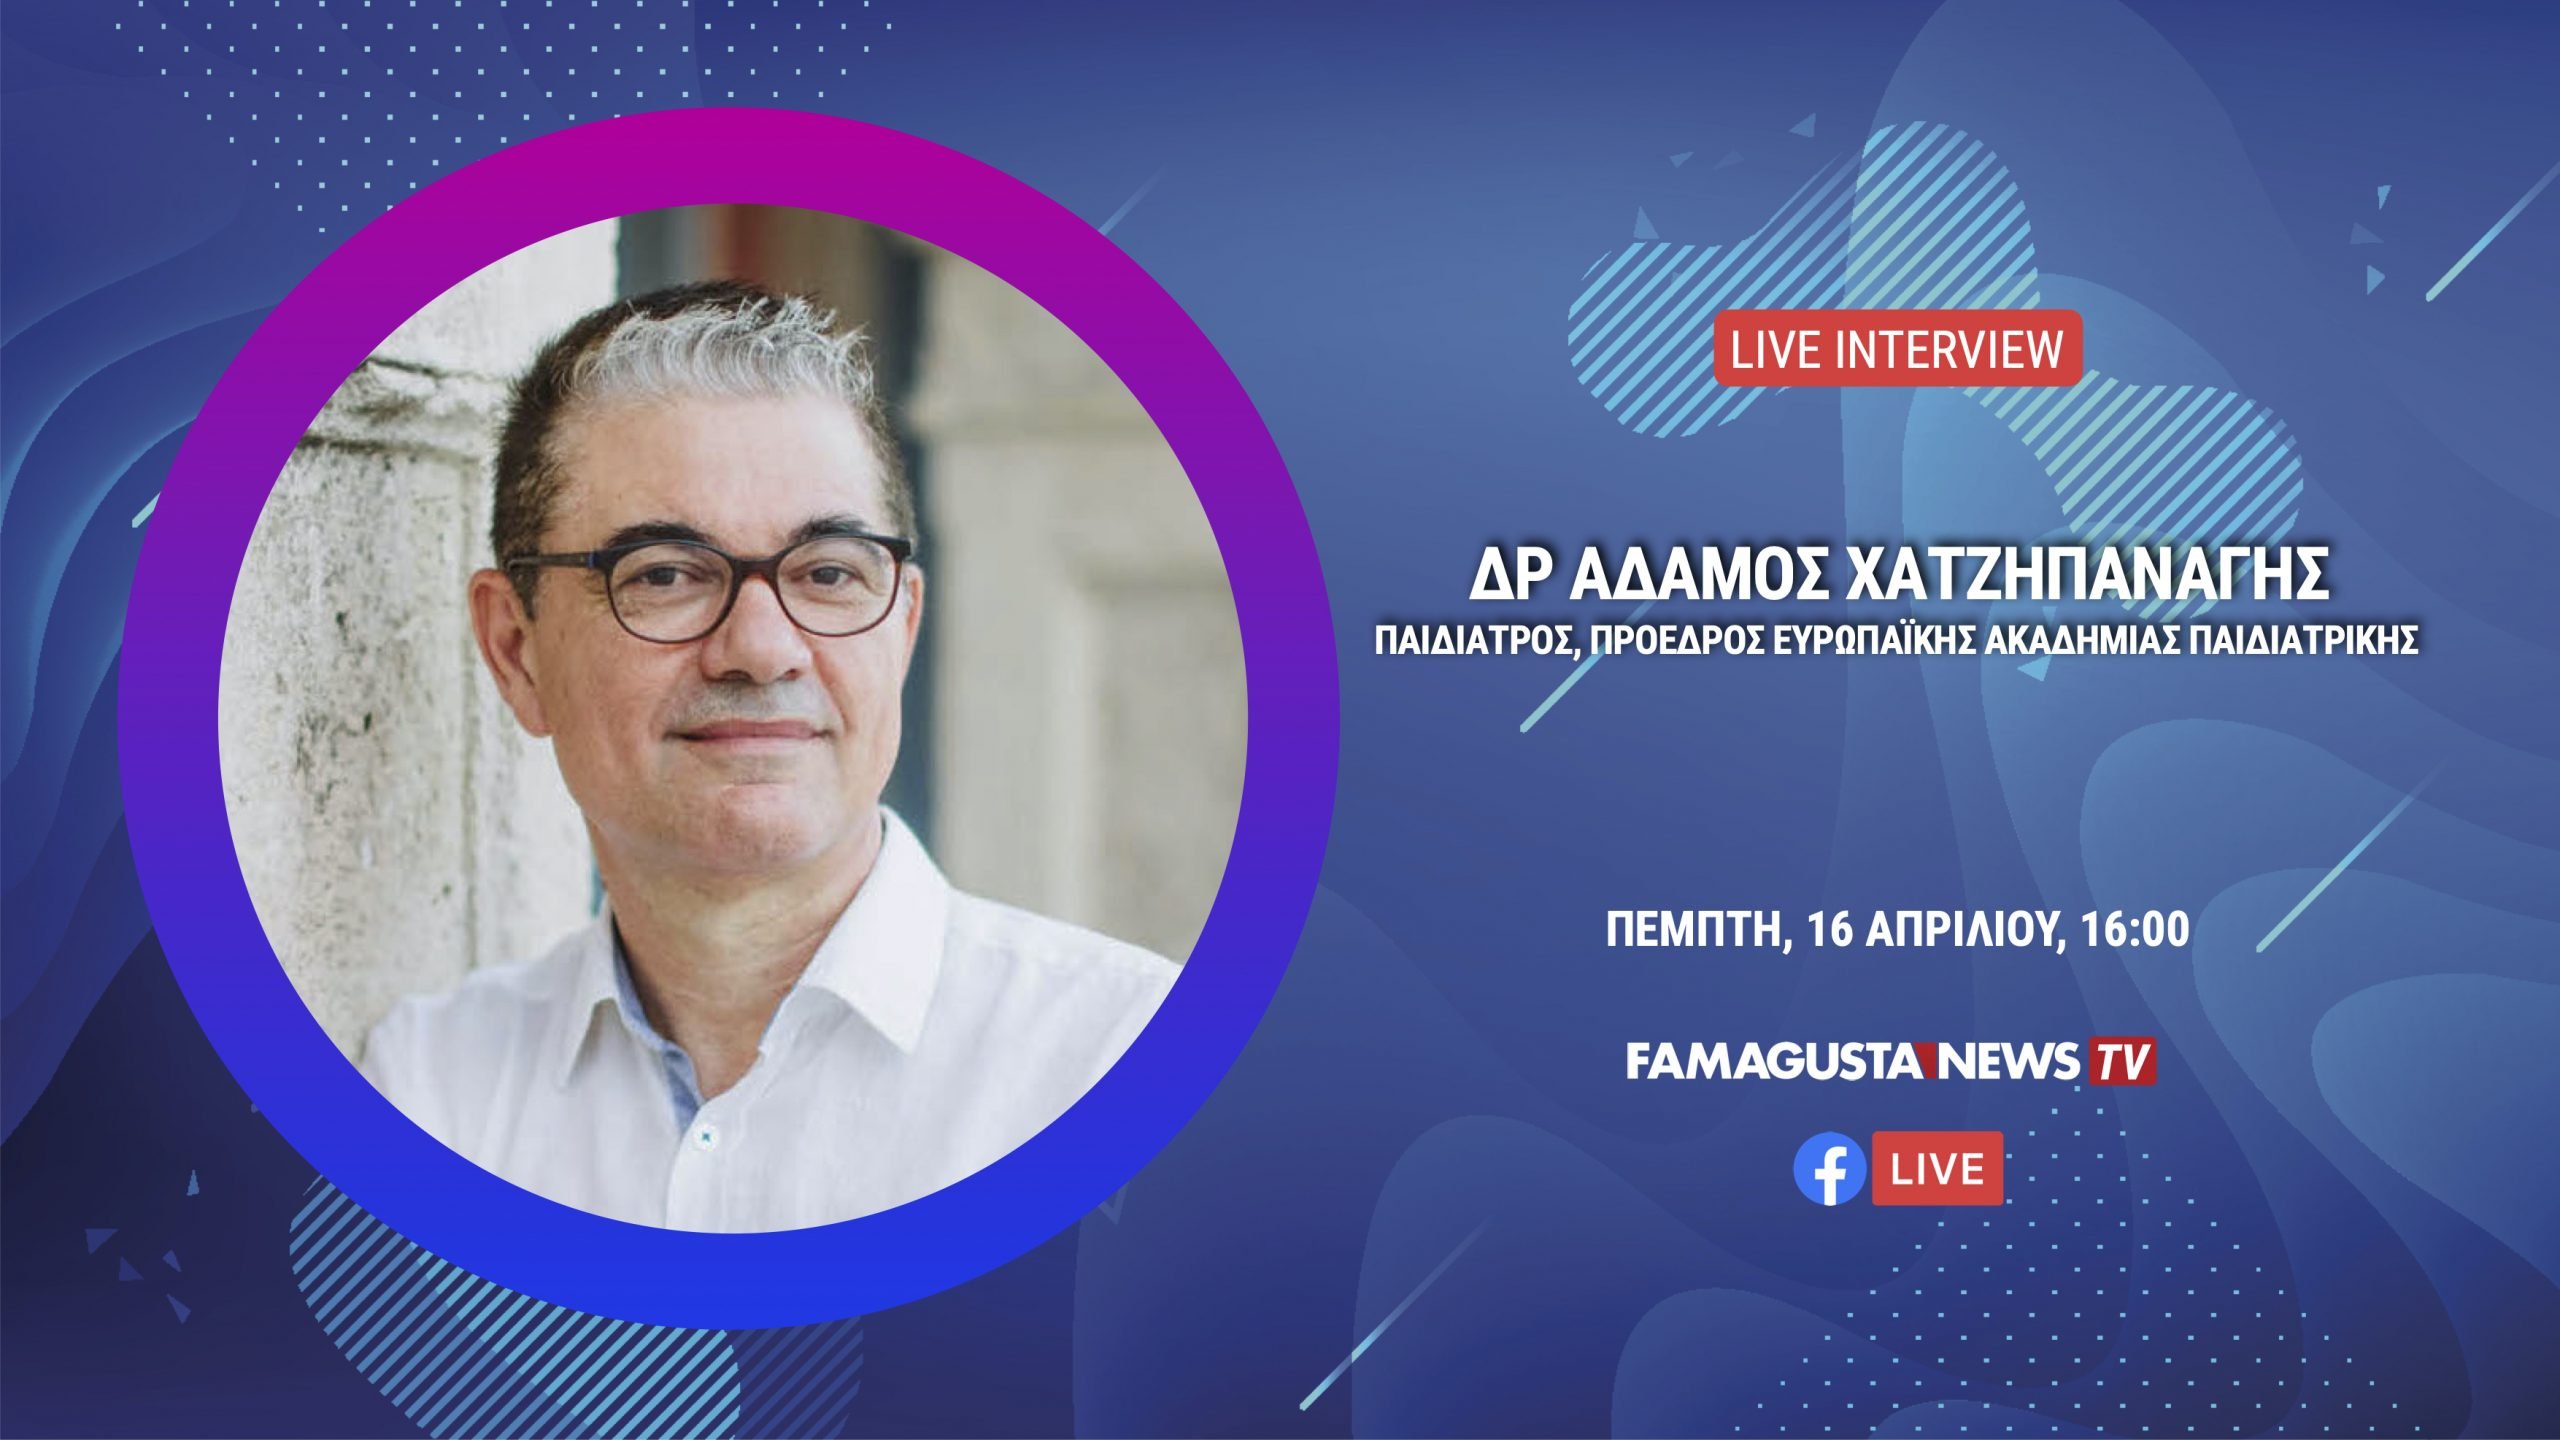 Live Interview copy scaled Adamos Hatzipanagis